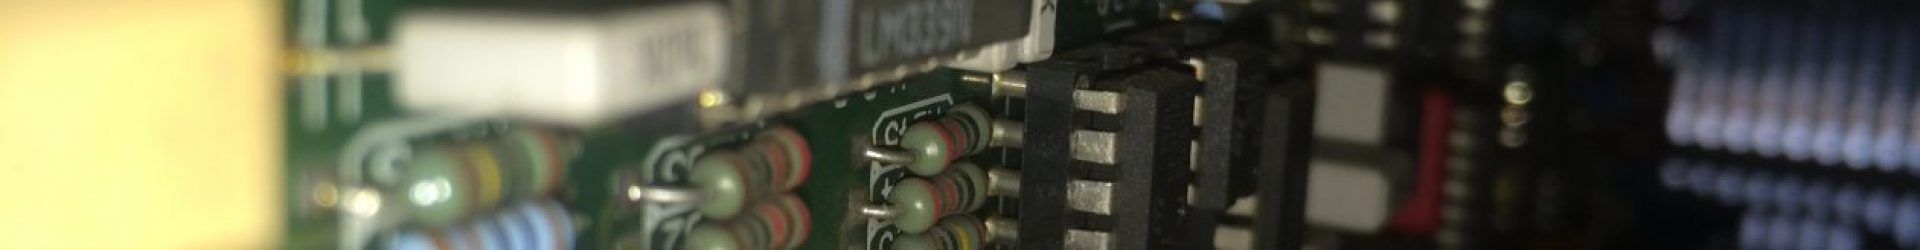 Roland FP-8 Keyboard Repair (Capacitors and Hammers)